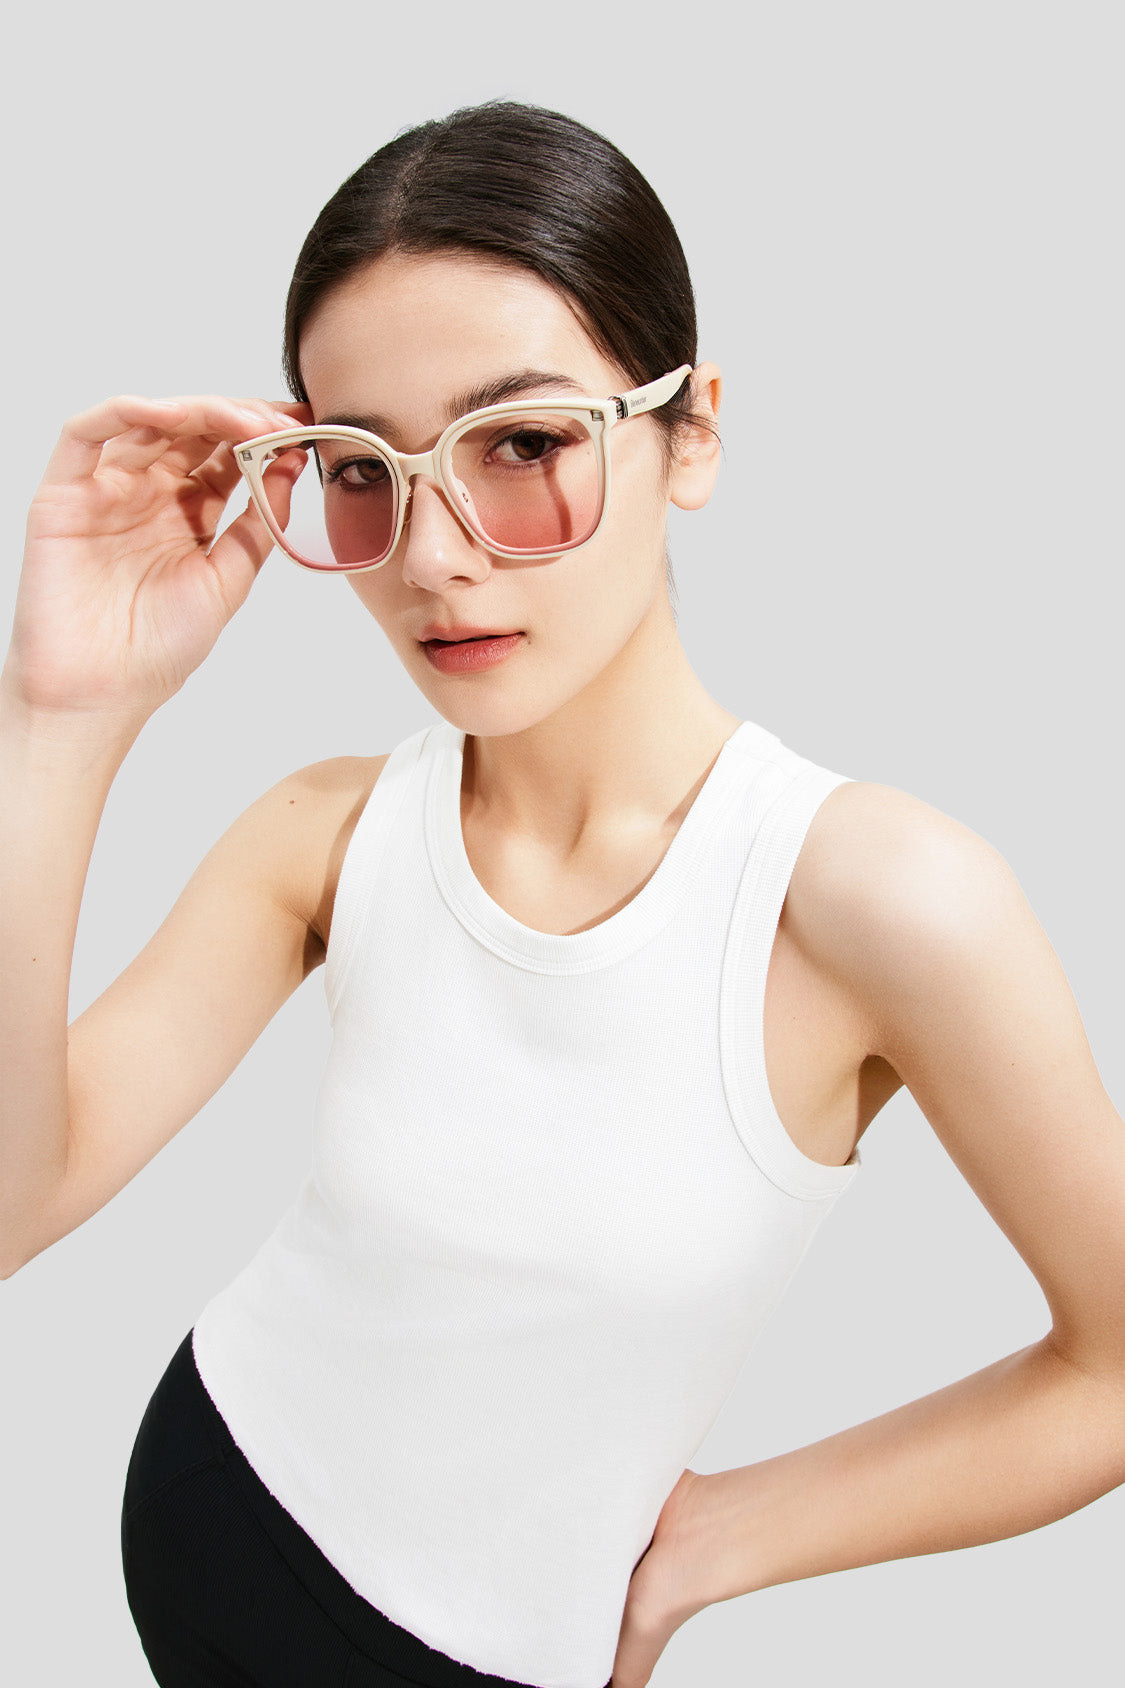 beneunder women's sunglasses #color_creamy white